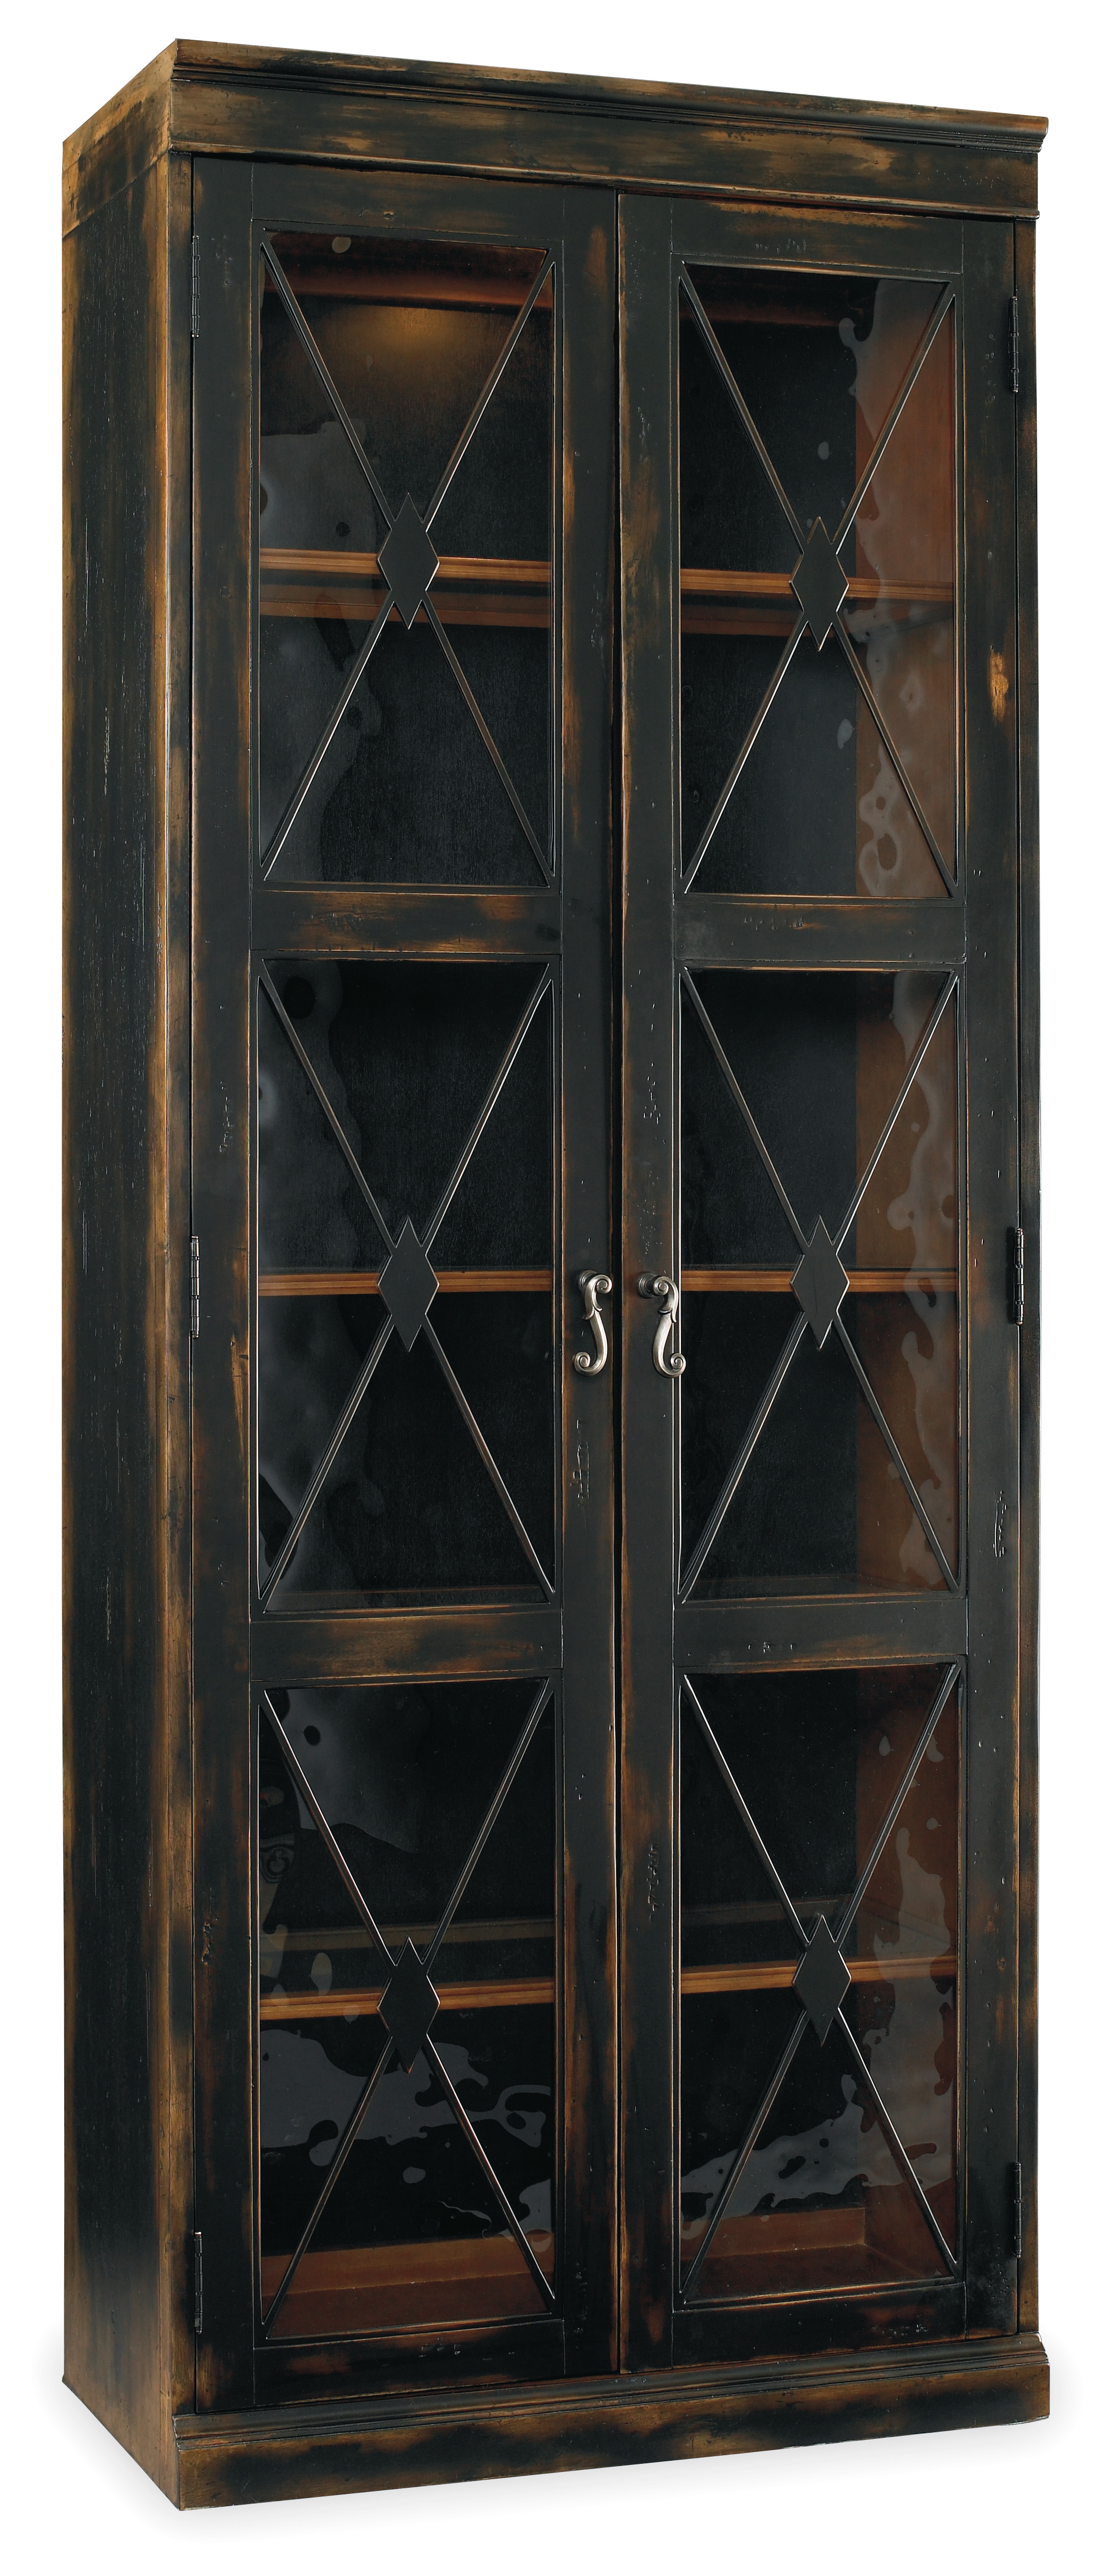 Picture of Thin Display Cabinet Ebony 2-Door